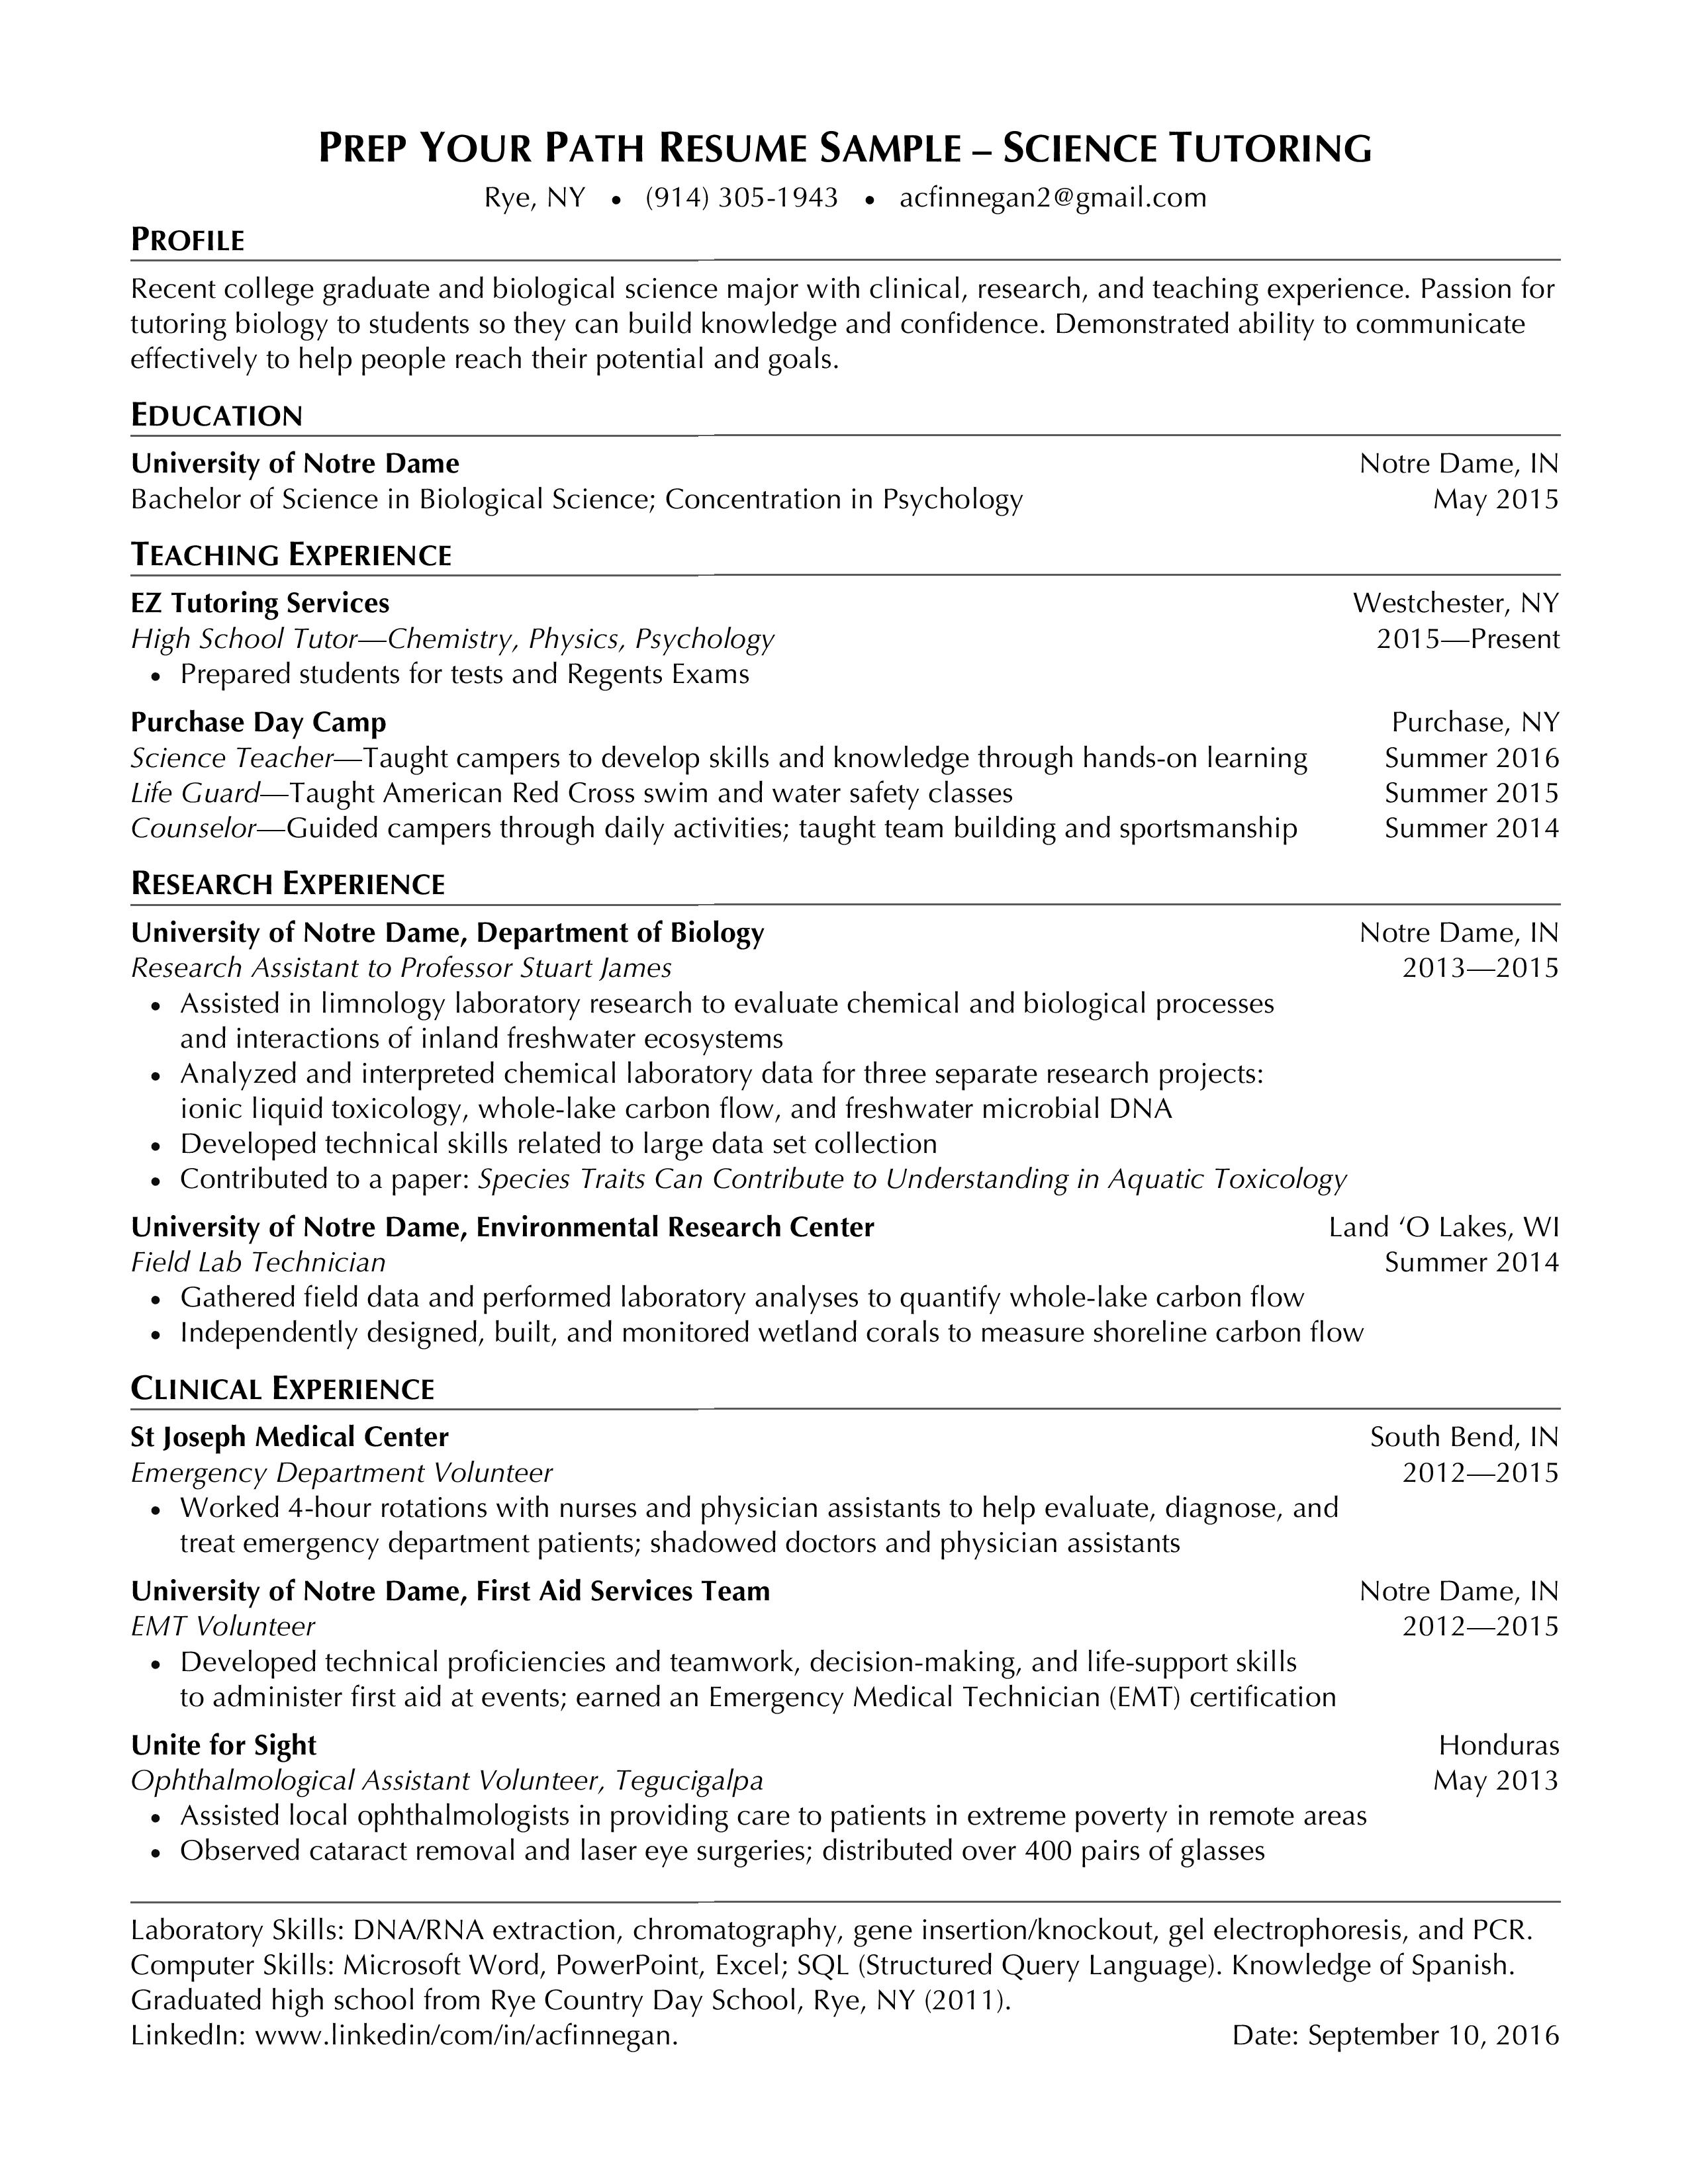 Targeted Resume #2 